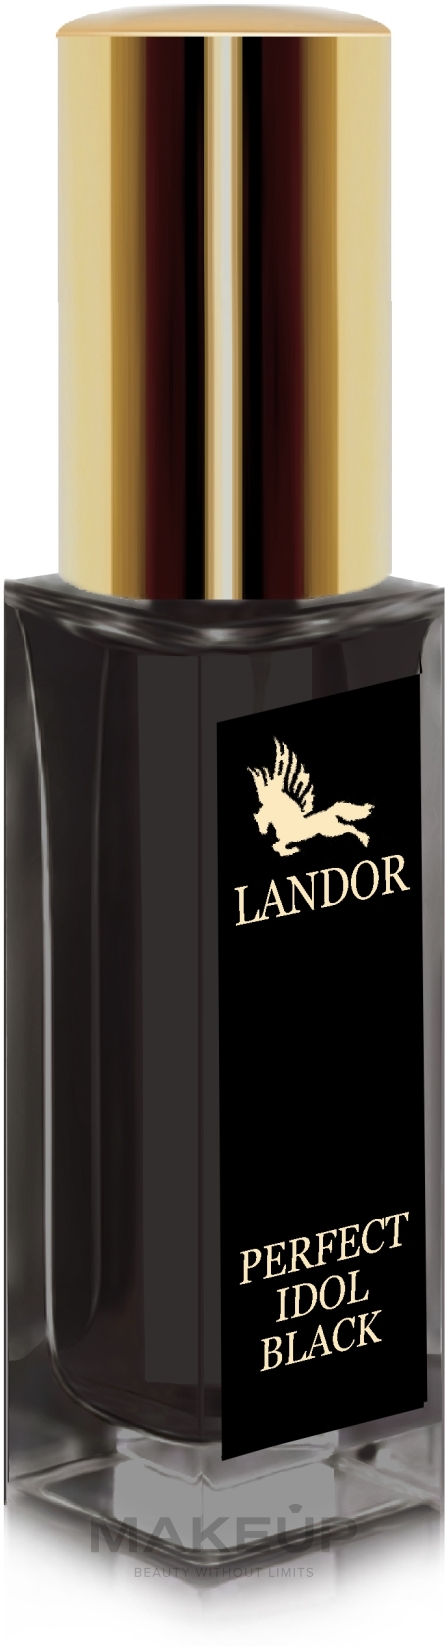 Landor Perfect Idol Black - Парфюмированная вода (мини) — фото 9ml